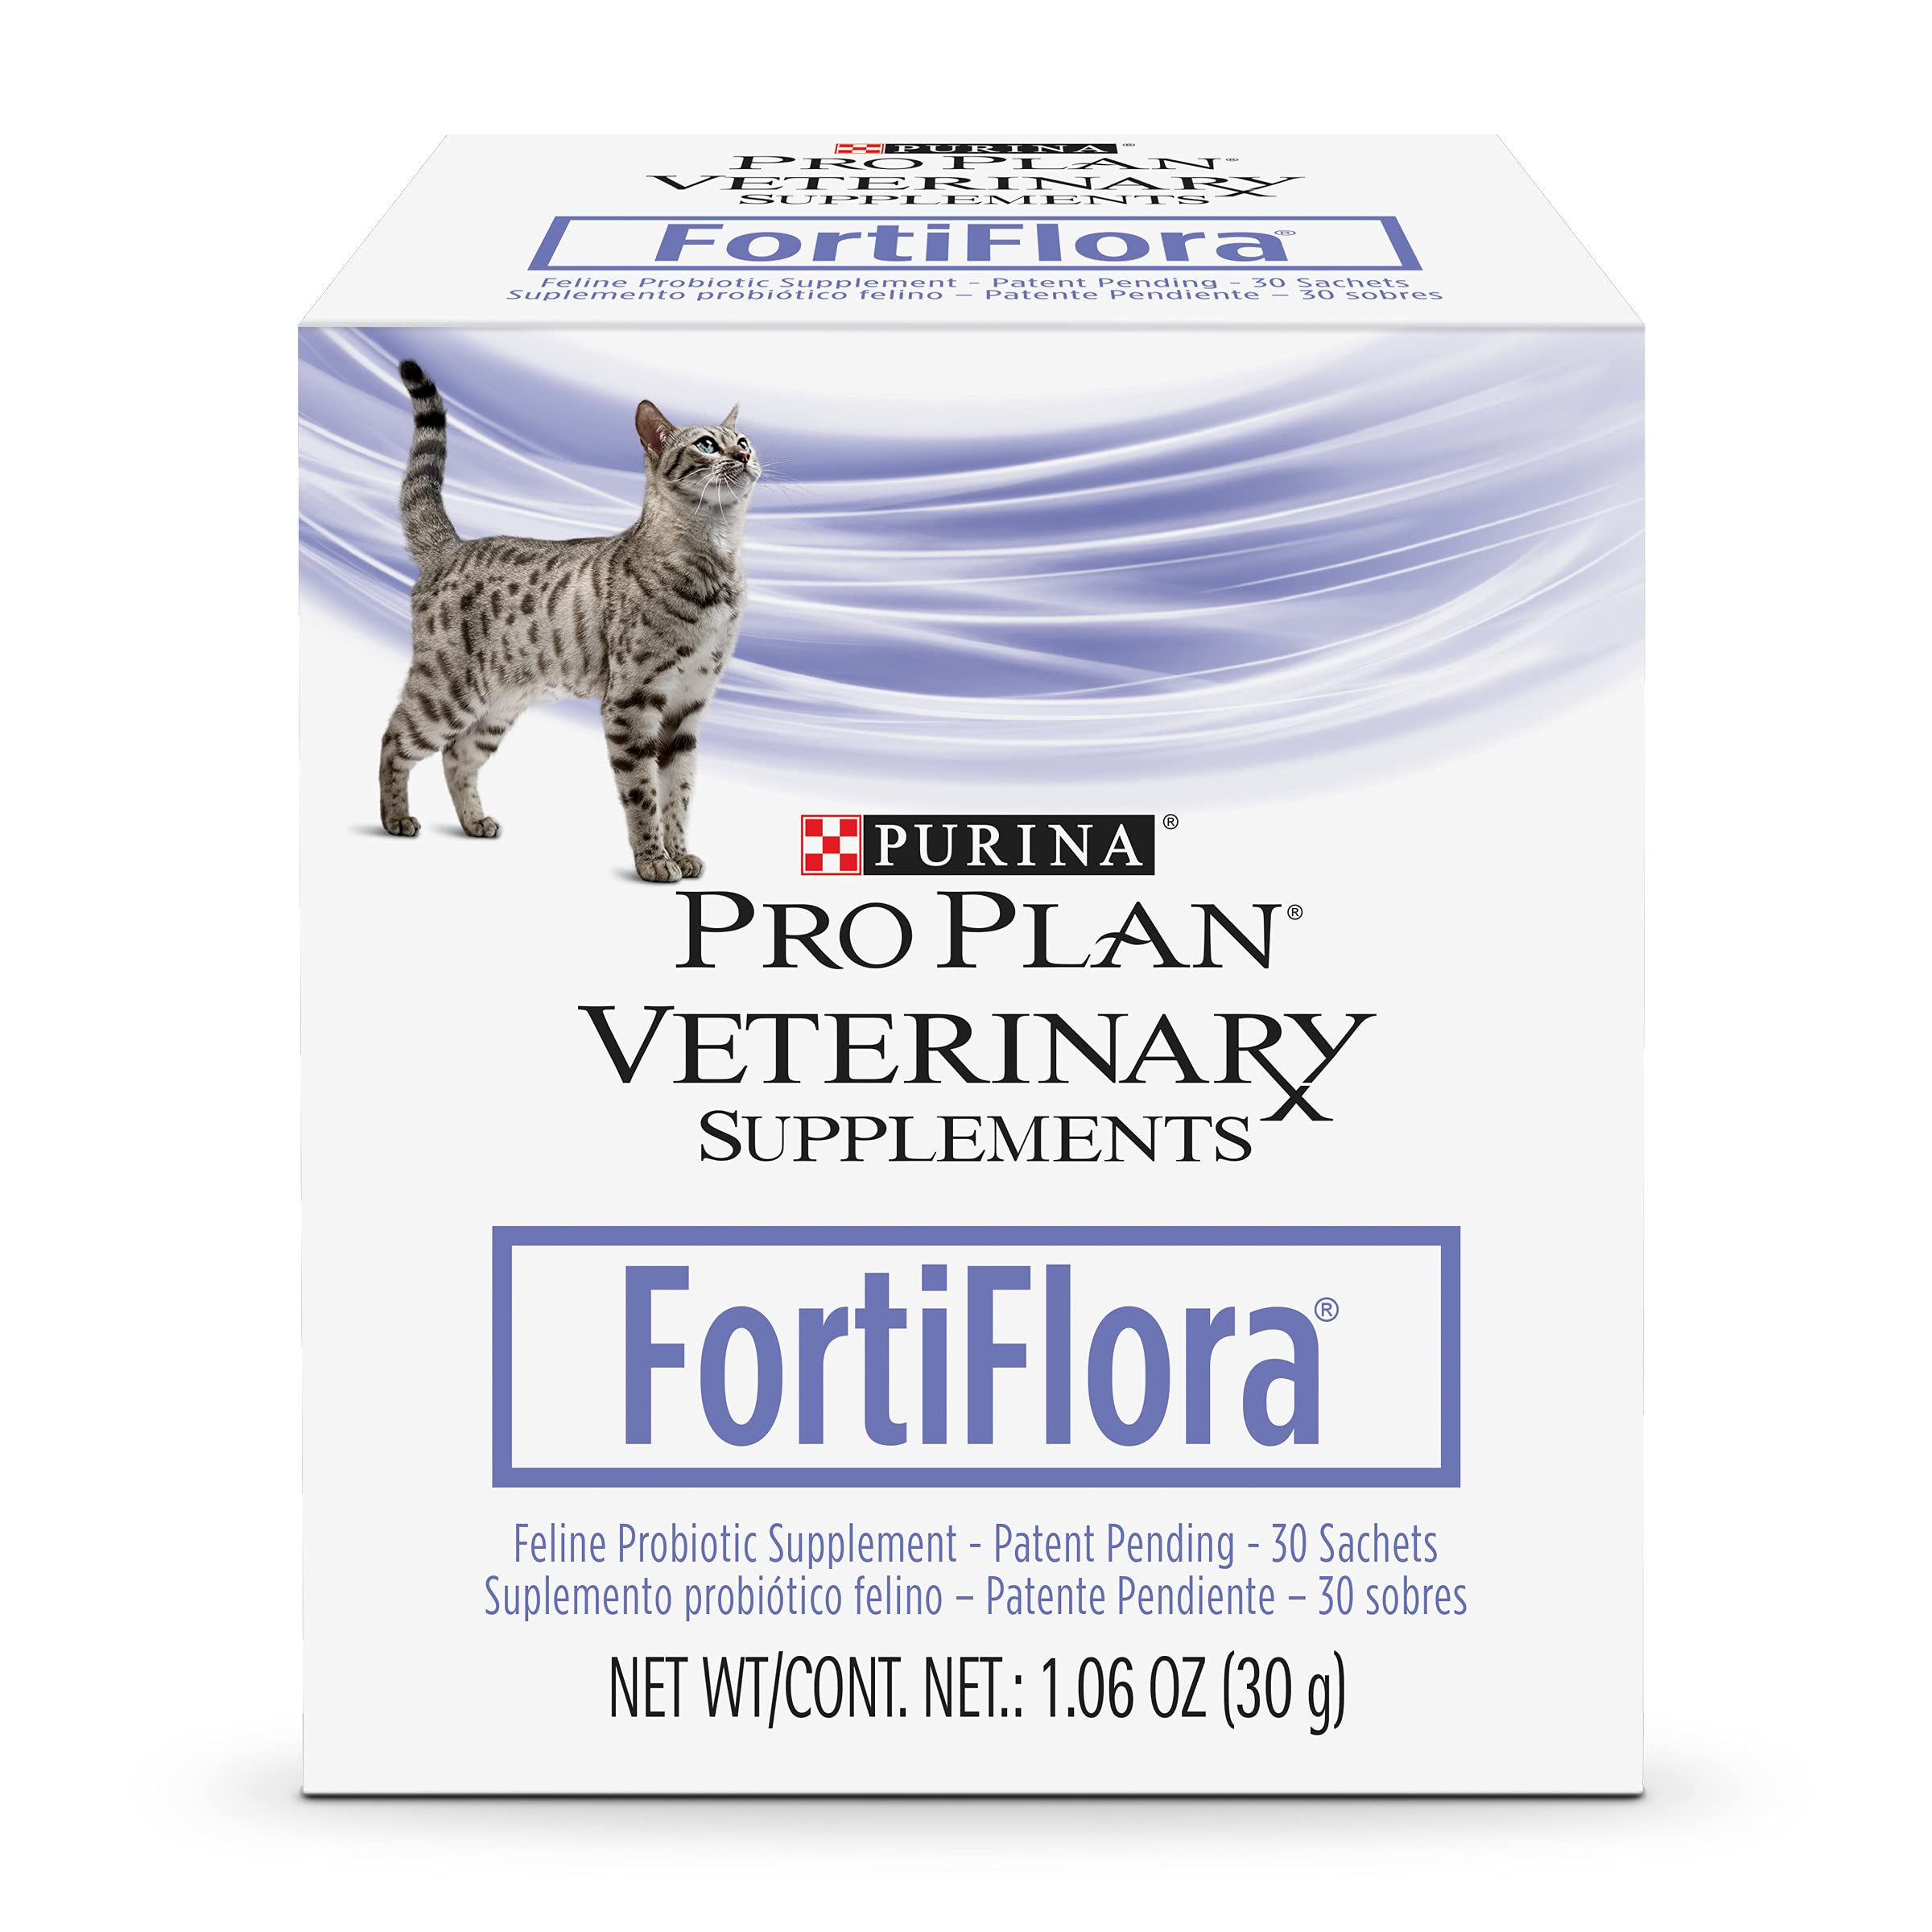 Purina Fortiflora 猫益生菌粉末补充剂，Pro Plan 兽医补充剂 益生菌猫补充剂